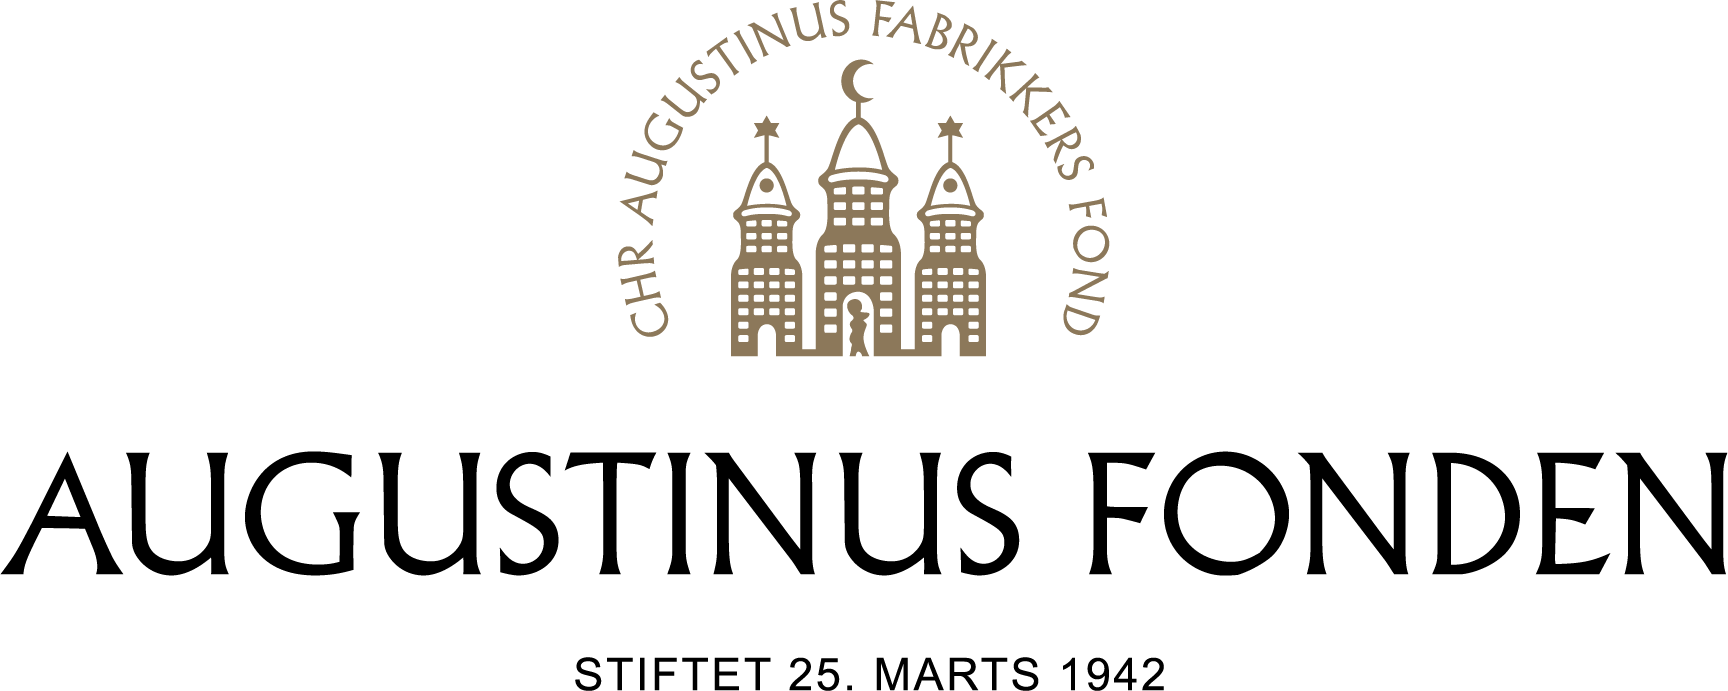 Augustinus Fonden primary logo Colour.png